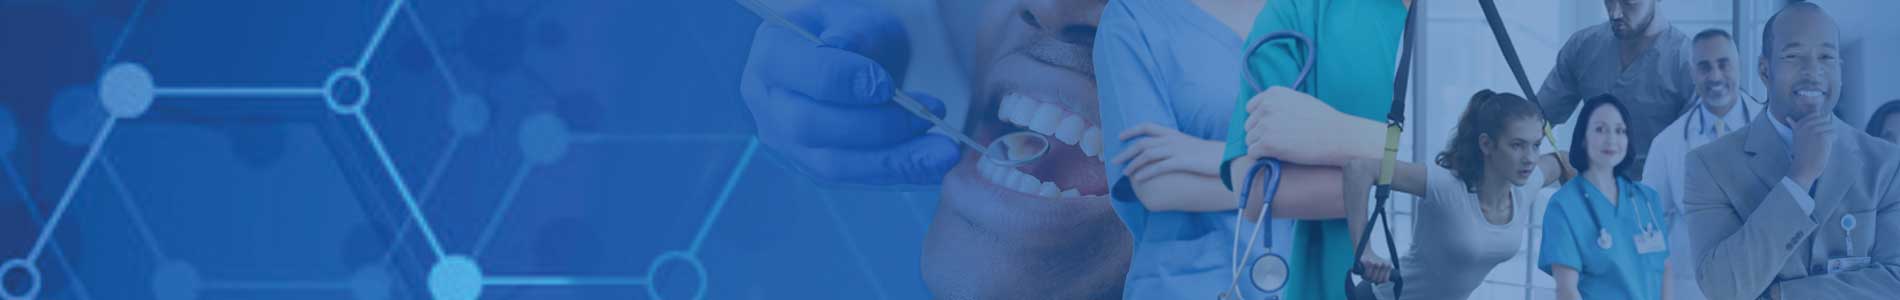 Dental Hygiene Clinic banner image